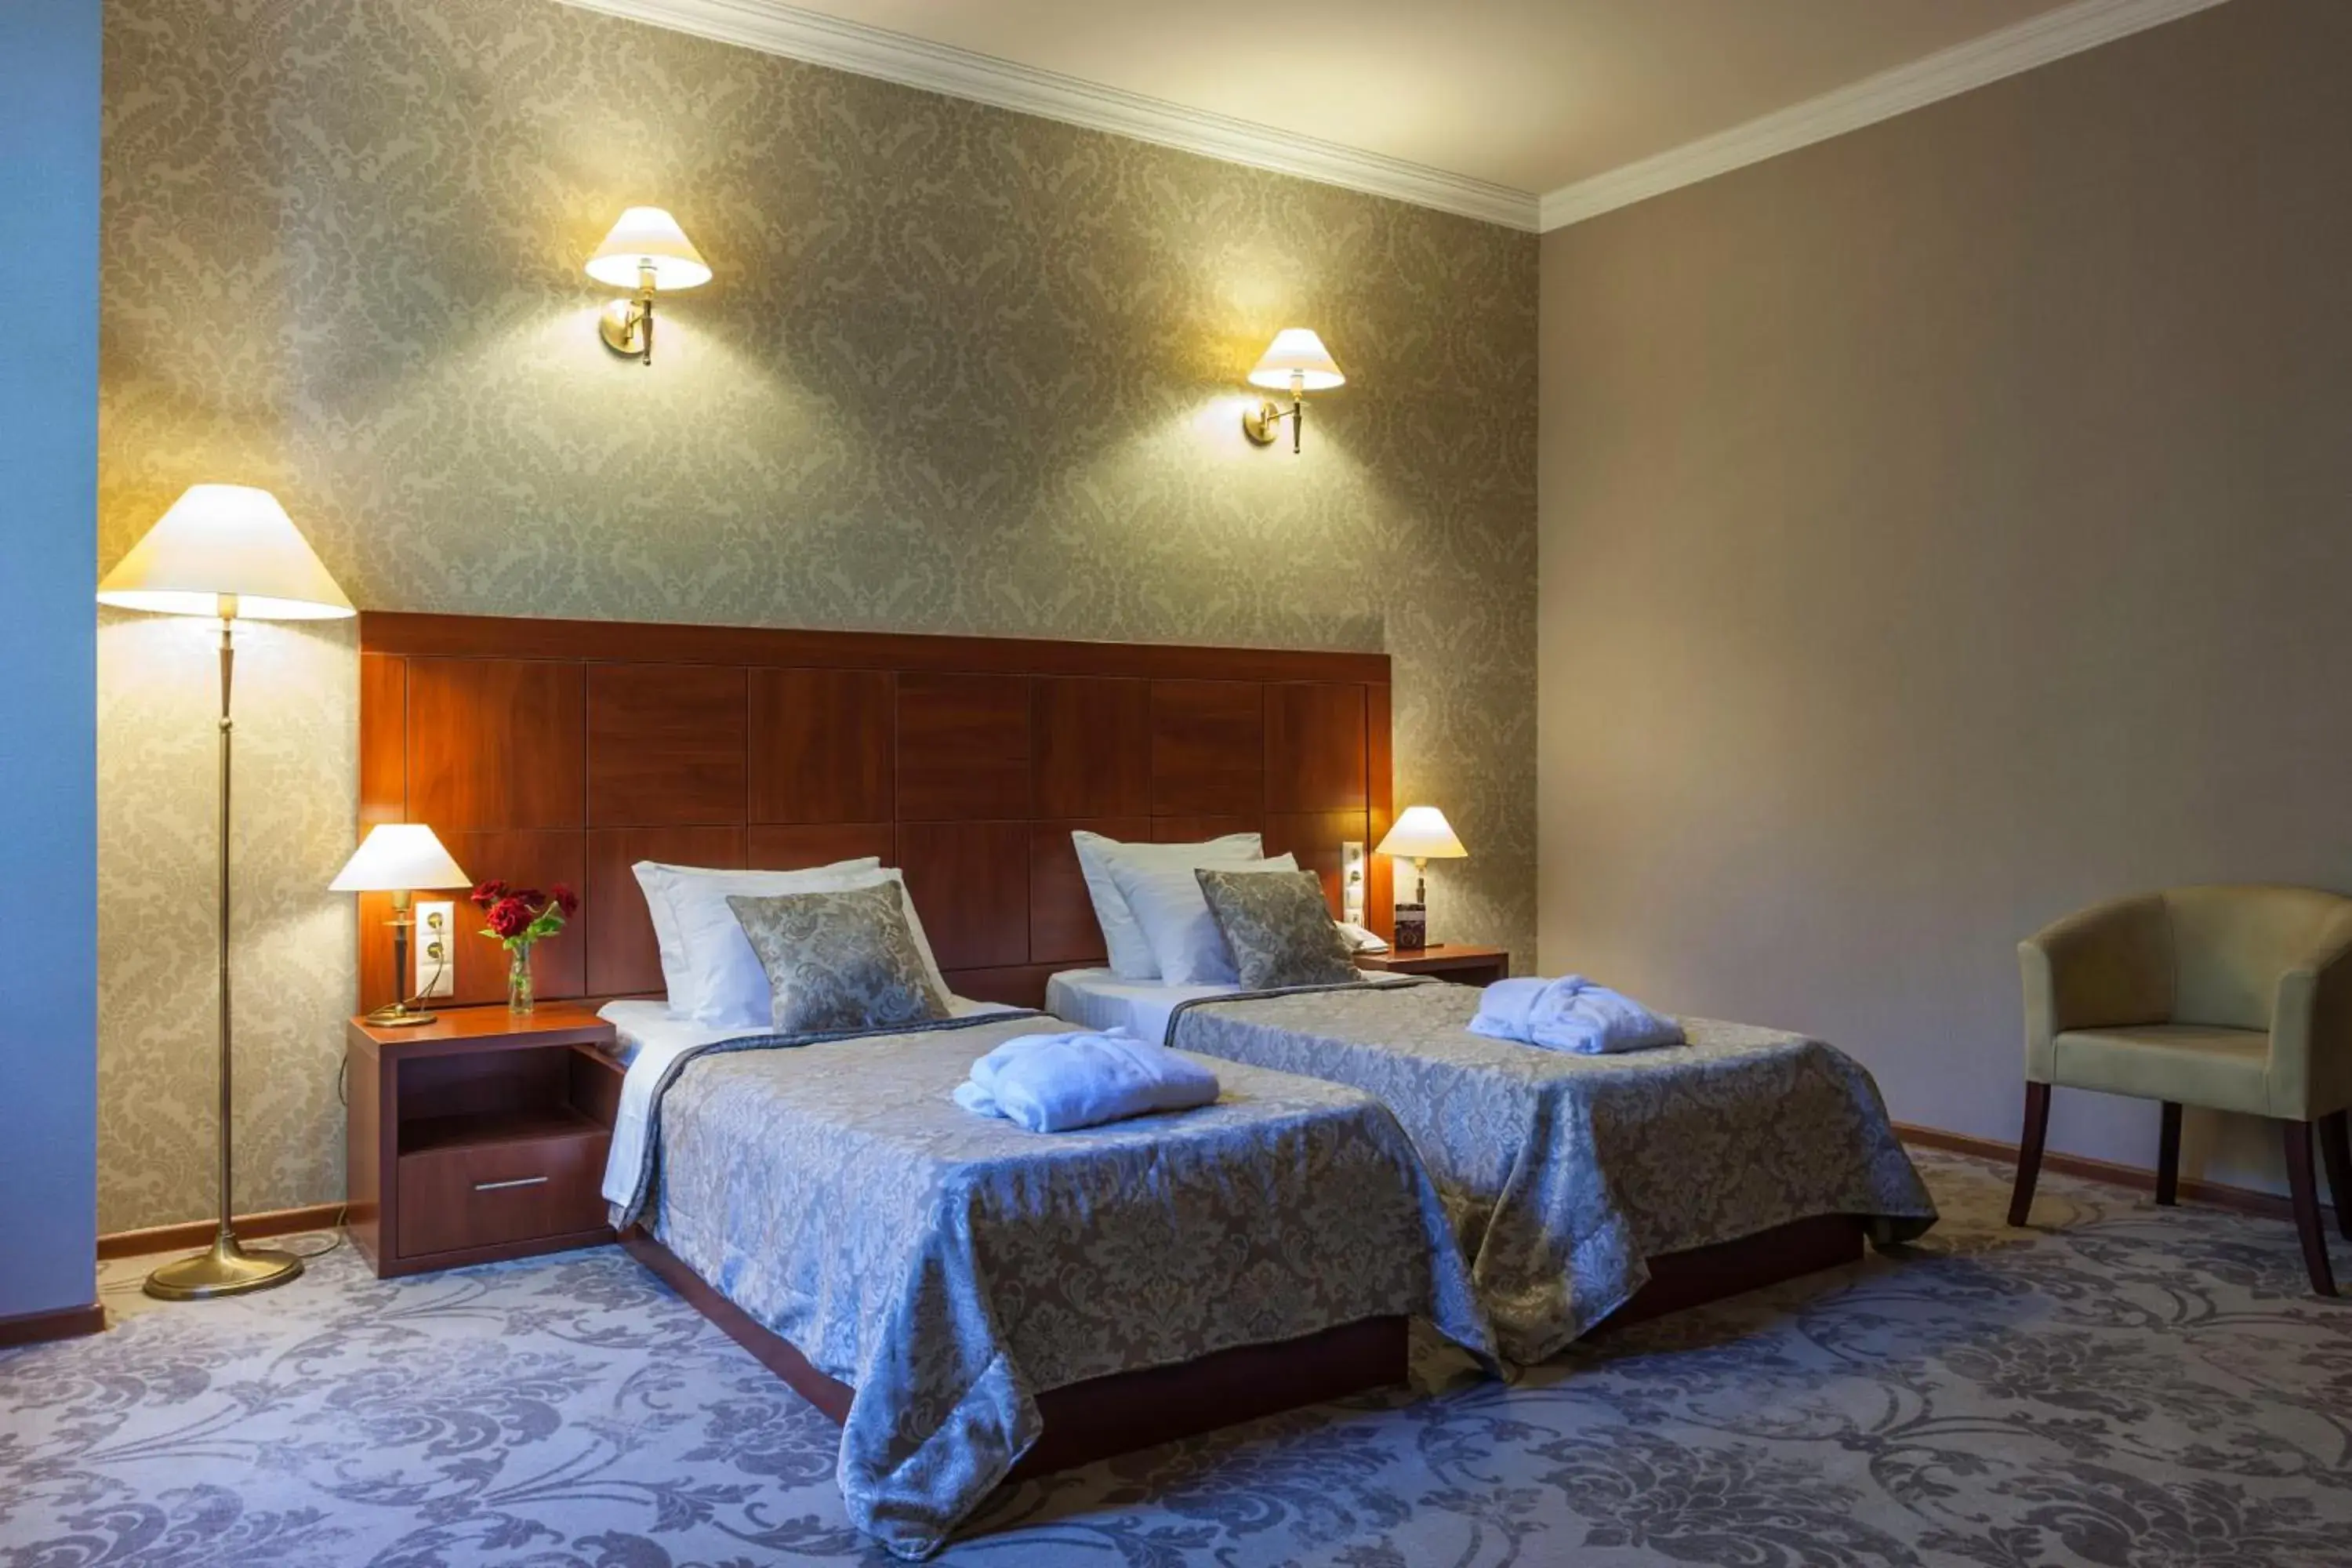 Bedroom, Room Photo in Hotel Astoria Tbilisi